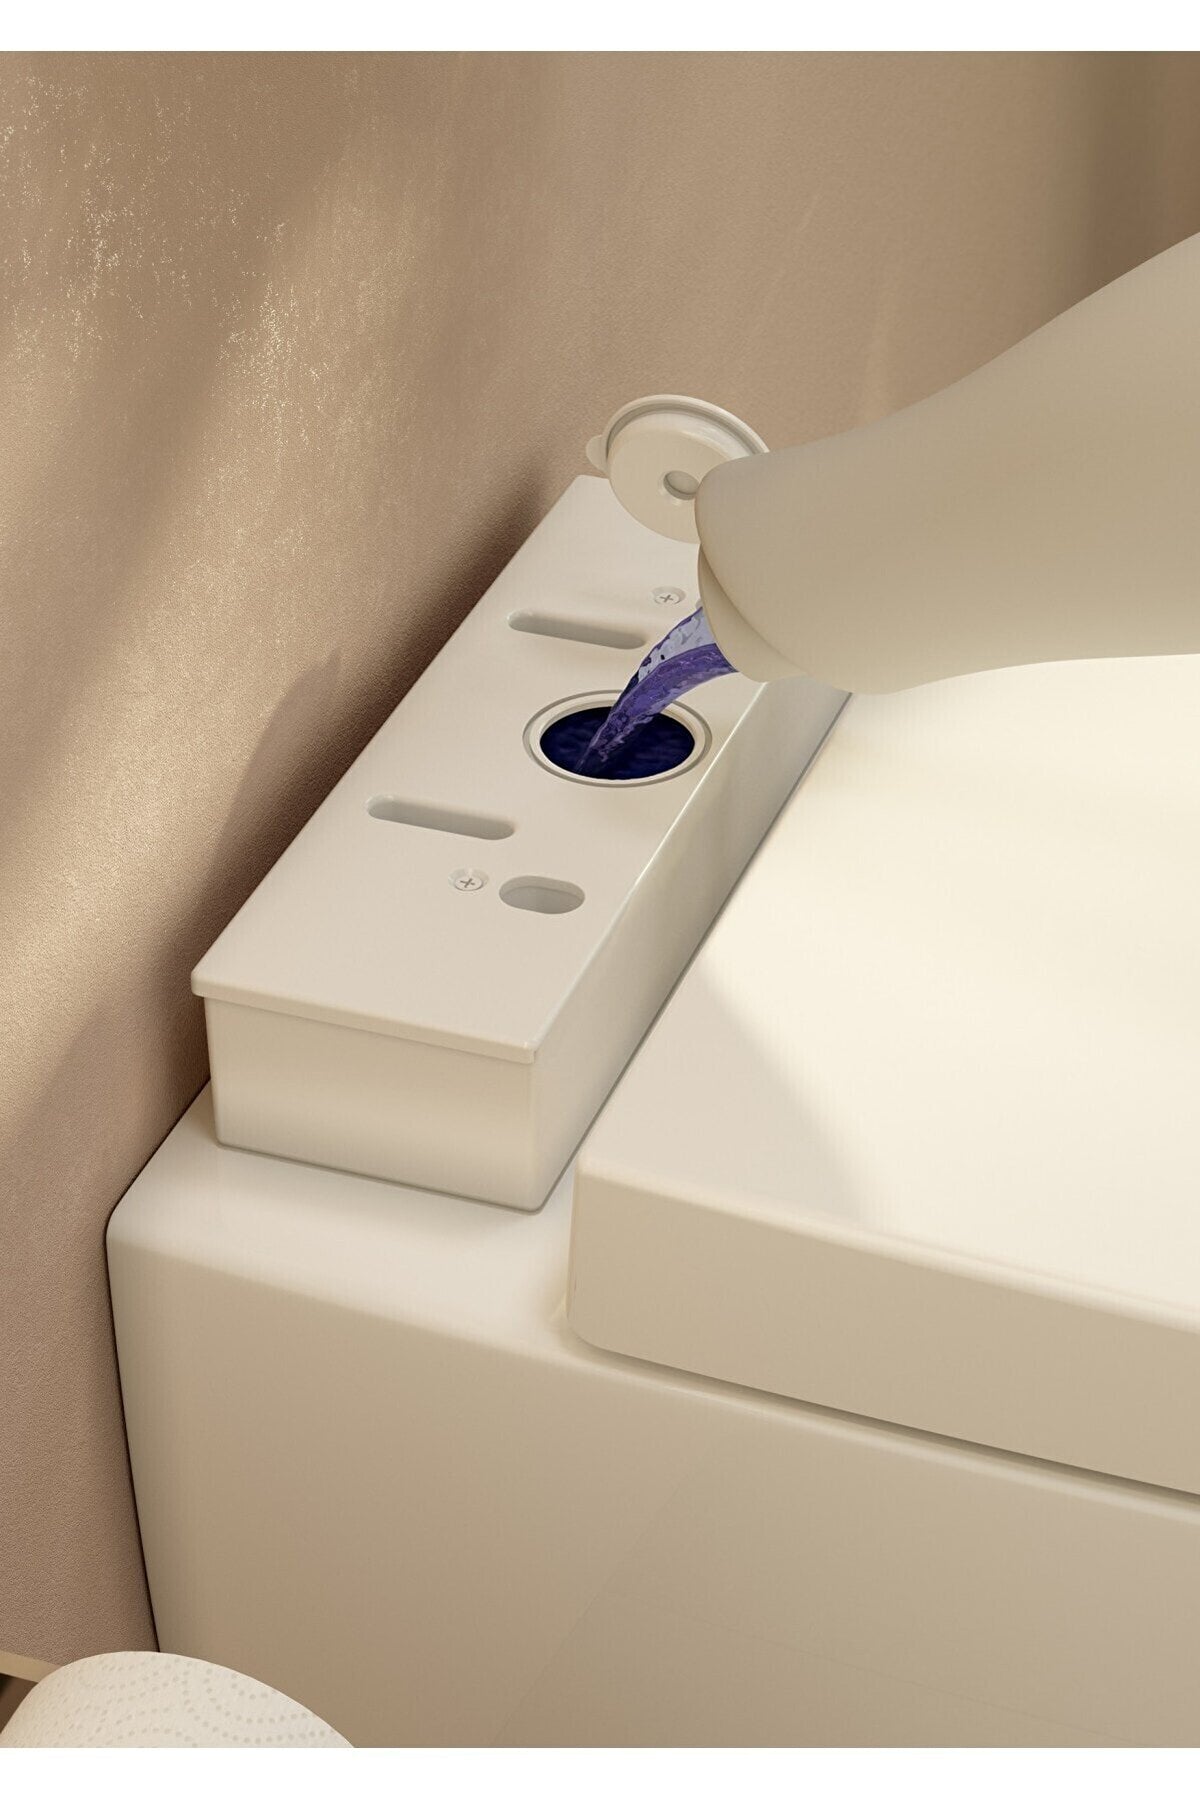 VitrA Options Nest Wand-WC VitrAflush 2.0 mit Bidetfunktion mit Thermostat-Armatur und Hygiene Reservoir